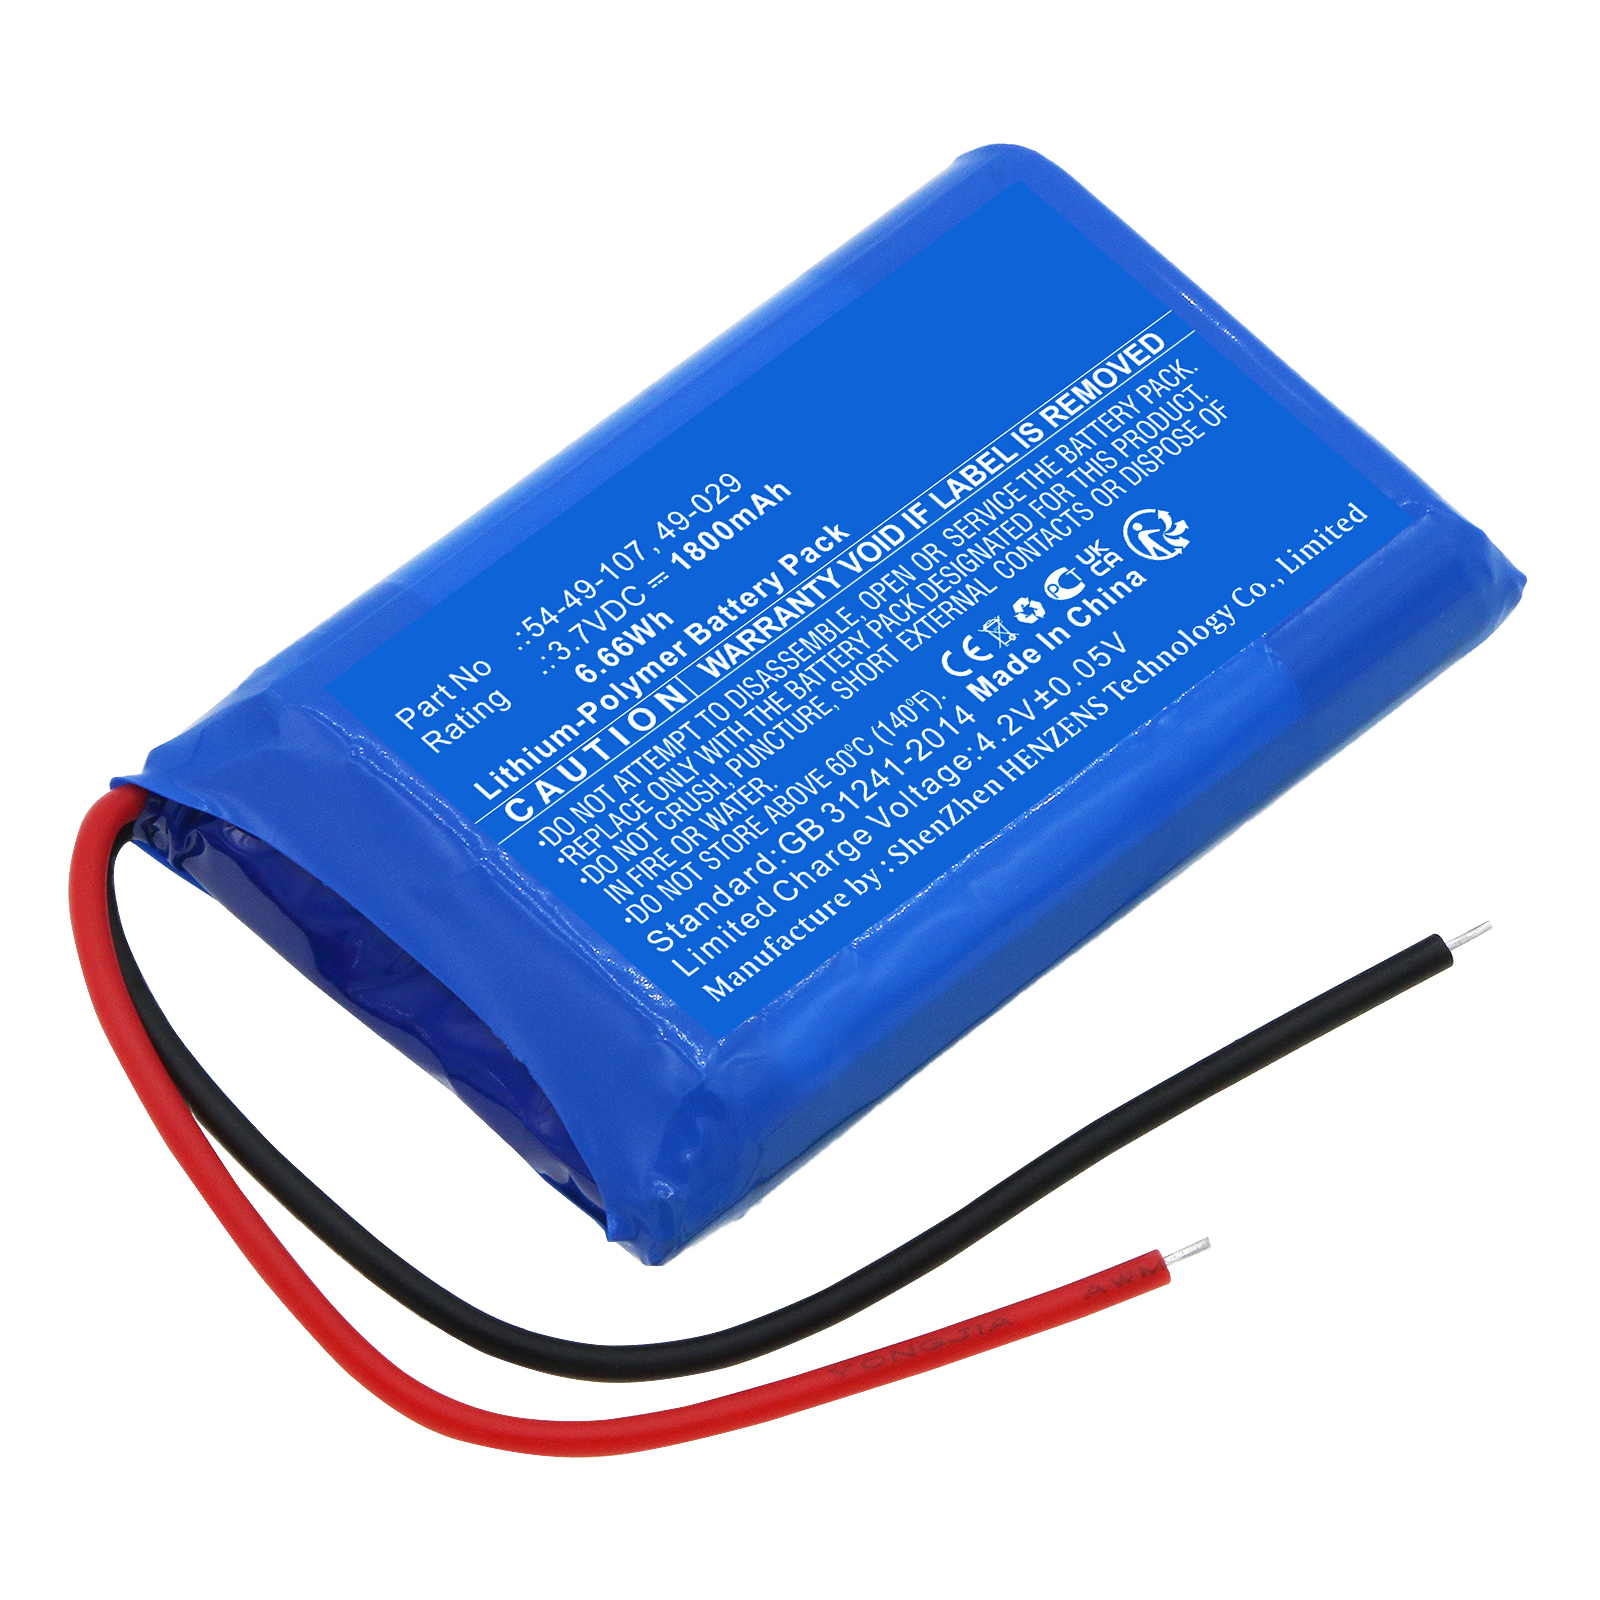 Synergy Digital Equipment Battery, Compatible with Biosystems 49-029 Equipment Battery (Li-Pol, 3.7V, 1800mAh)